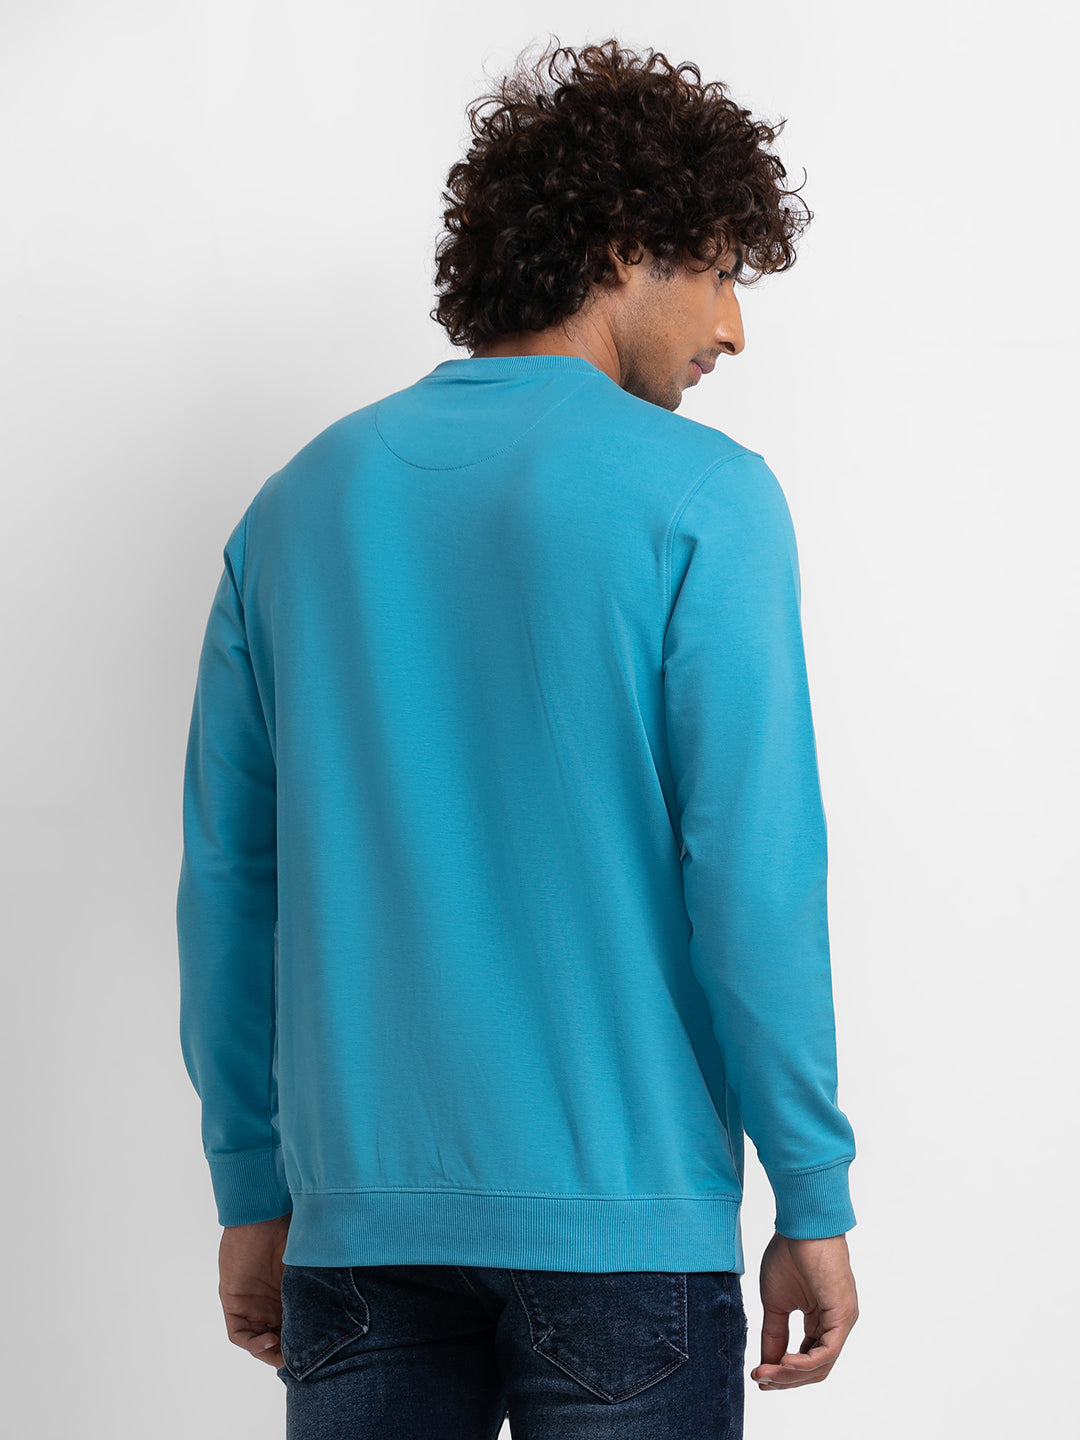 Spykar Cool Blue Cotton Full Sleeve Round Neck Sweatshirt For Men